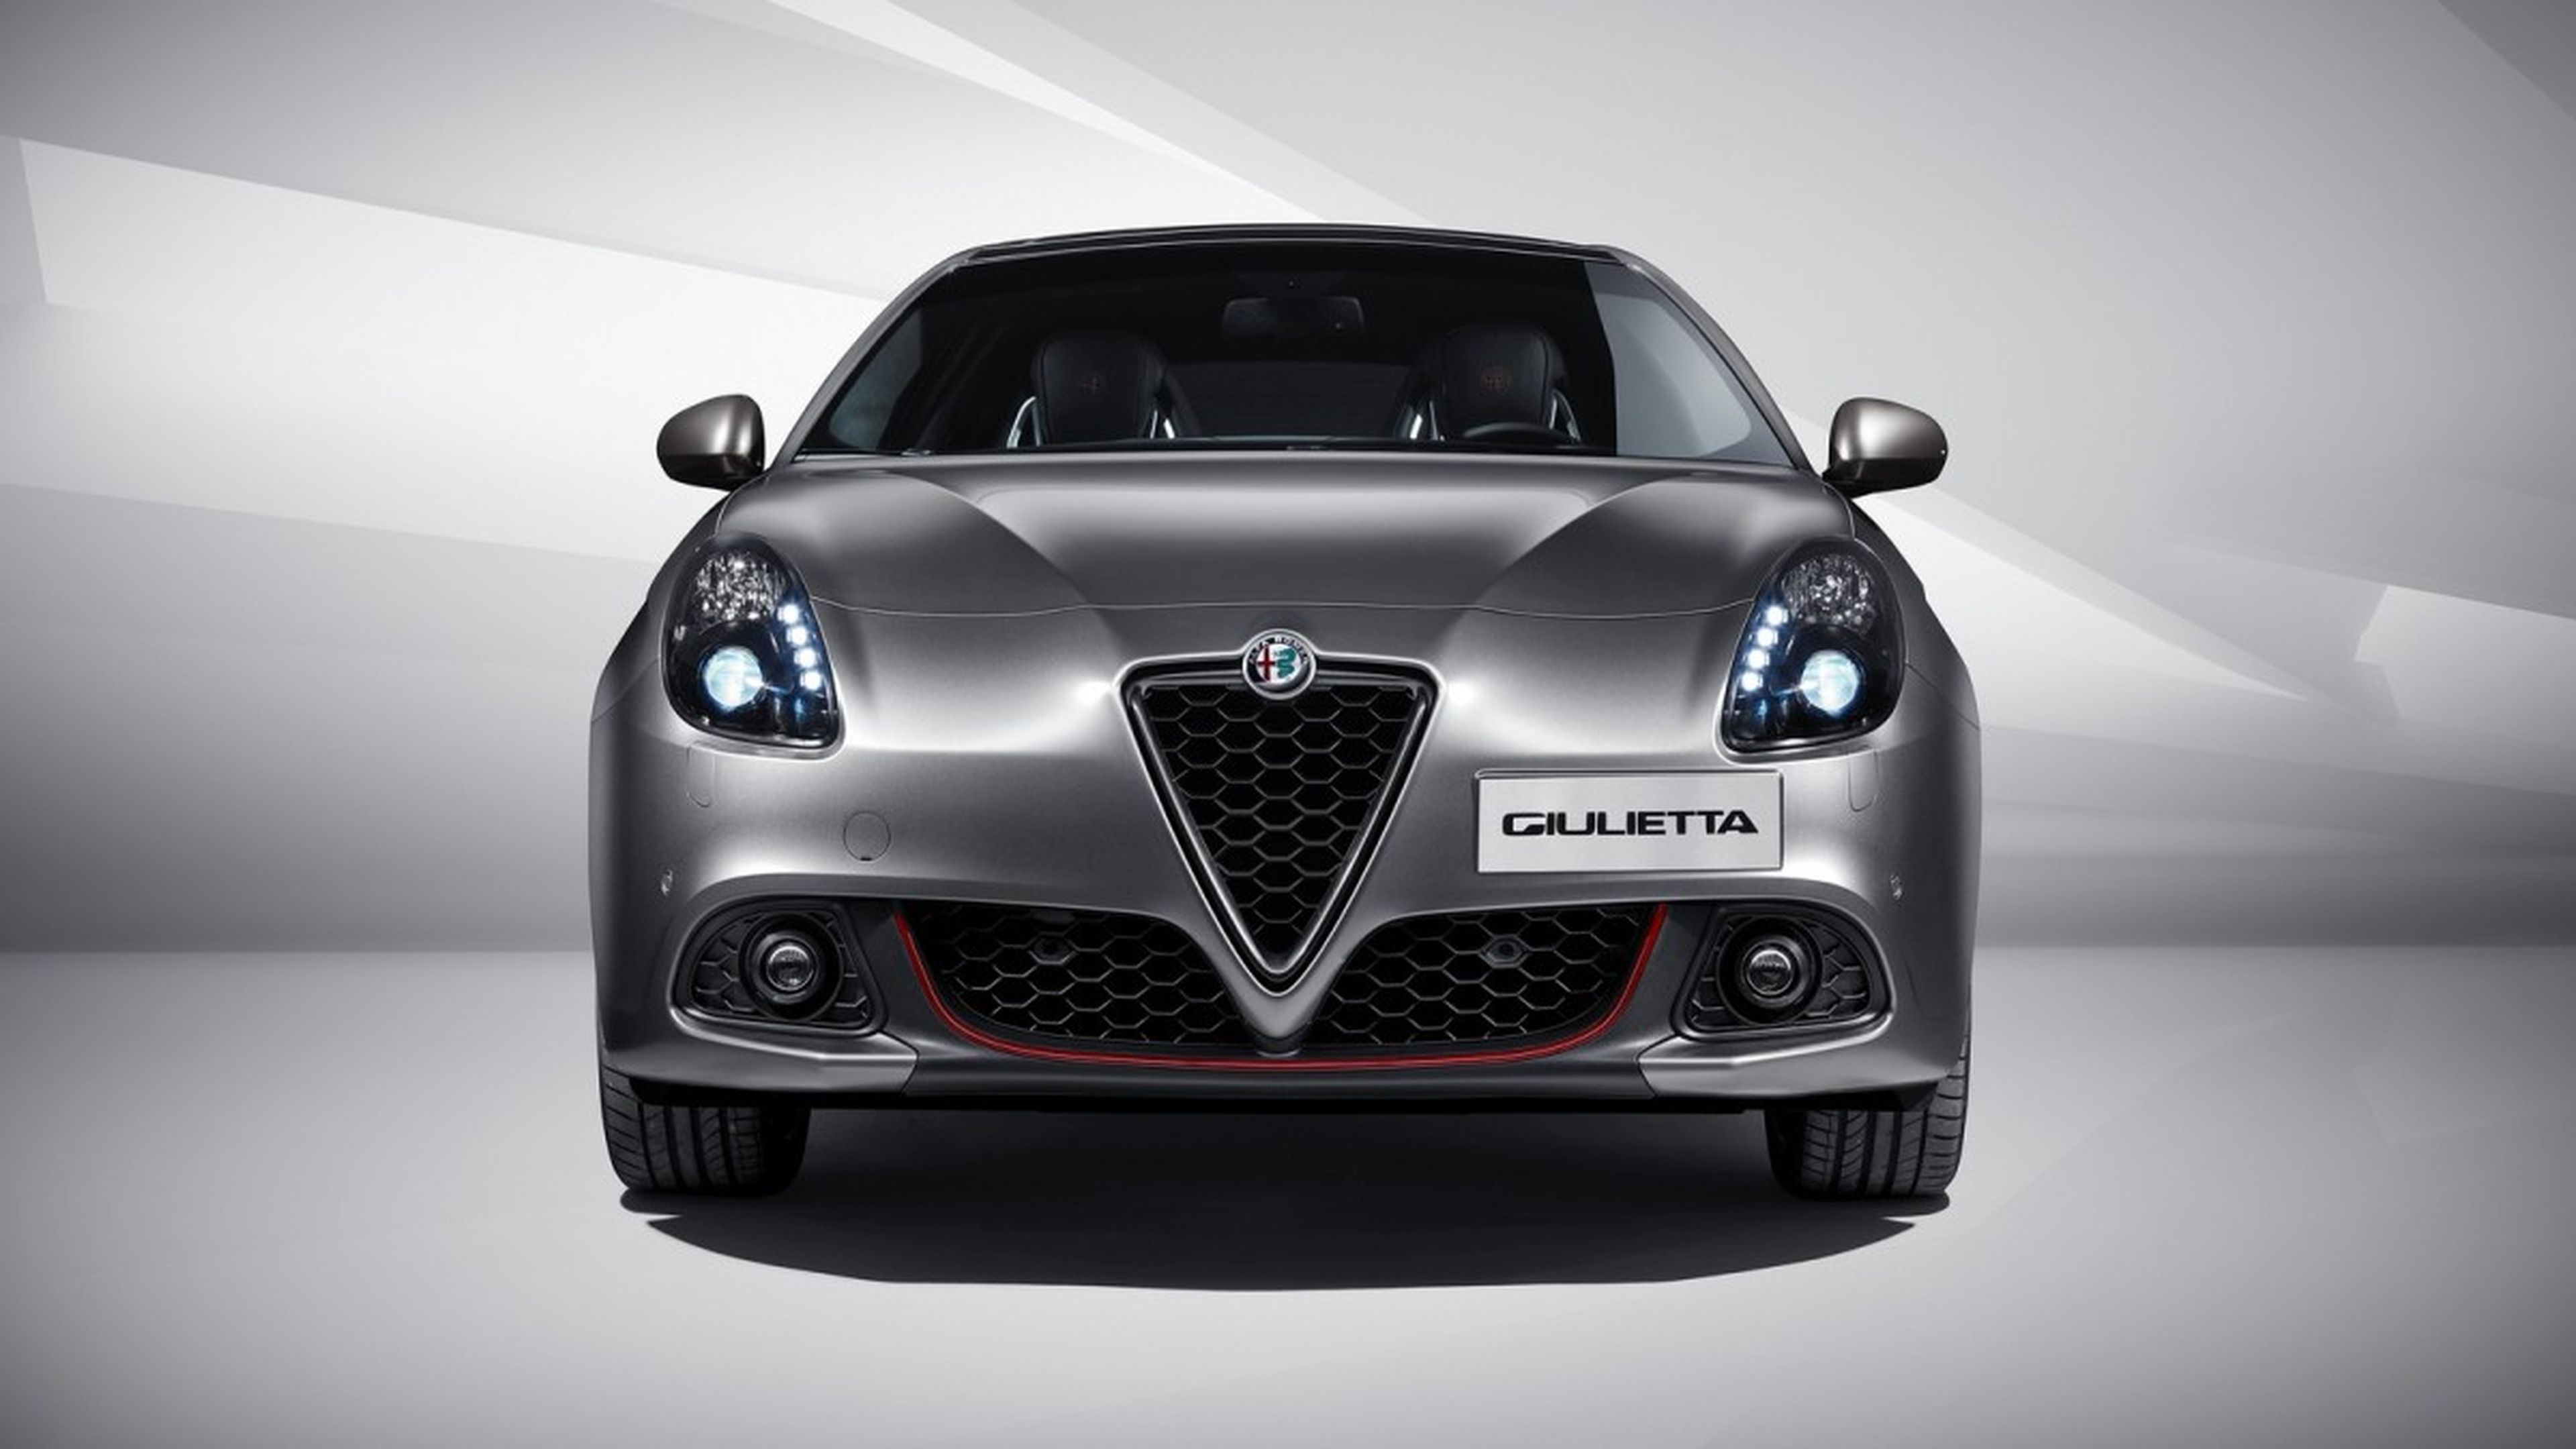 Alfa Romeo Giulietta 2016 frontal